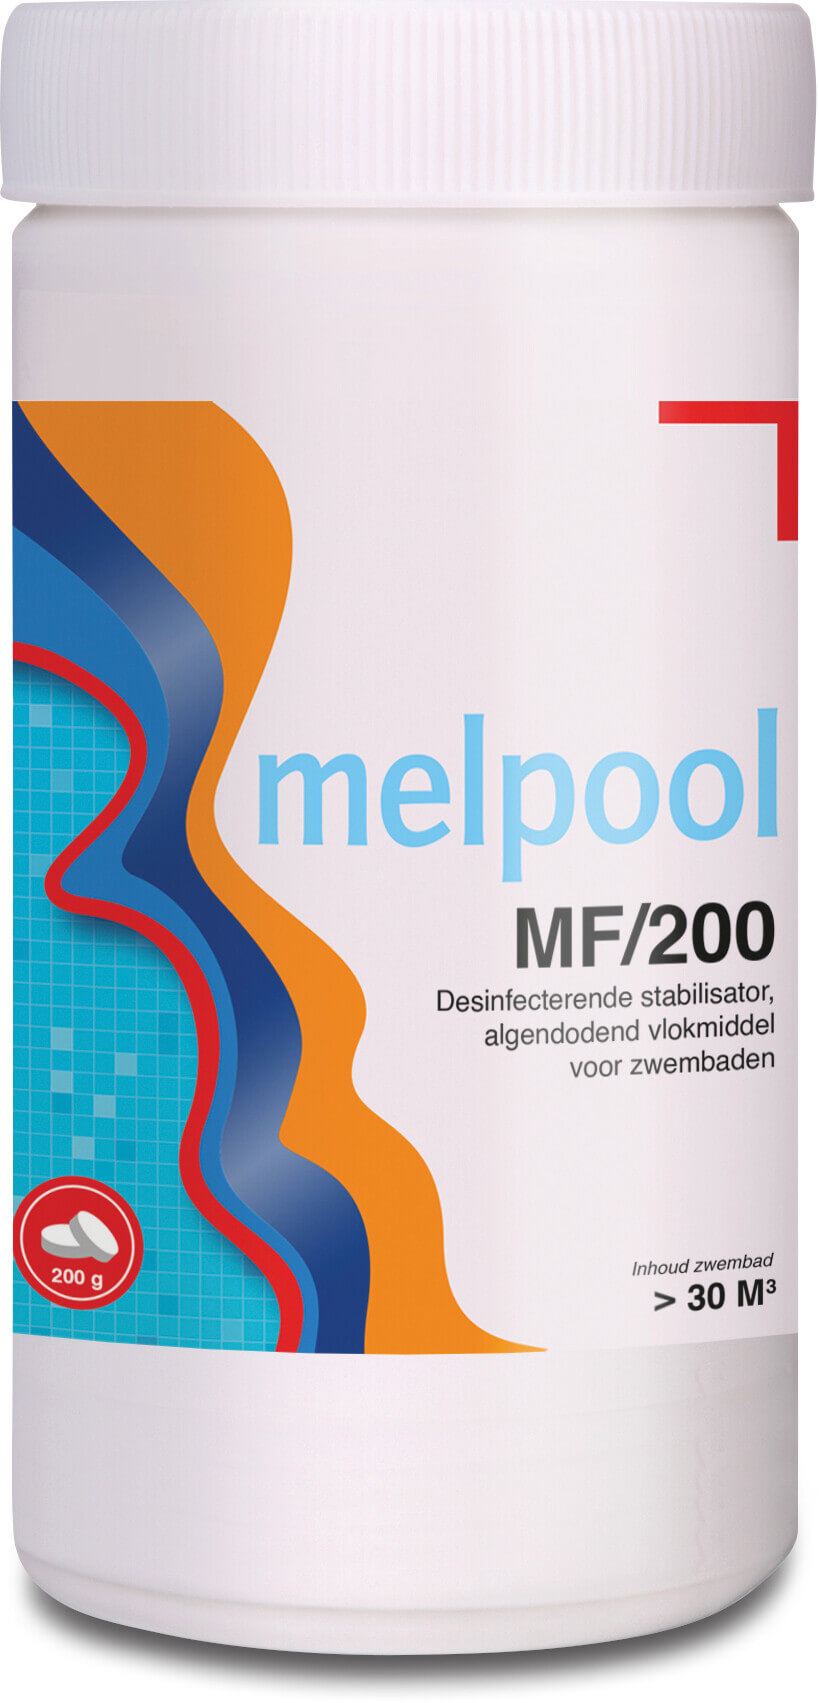 Melpool MF/200 tablets 1000g type tab 200g